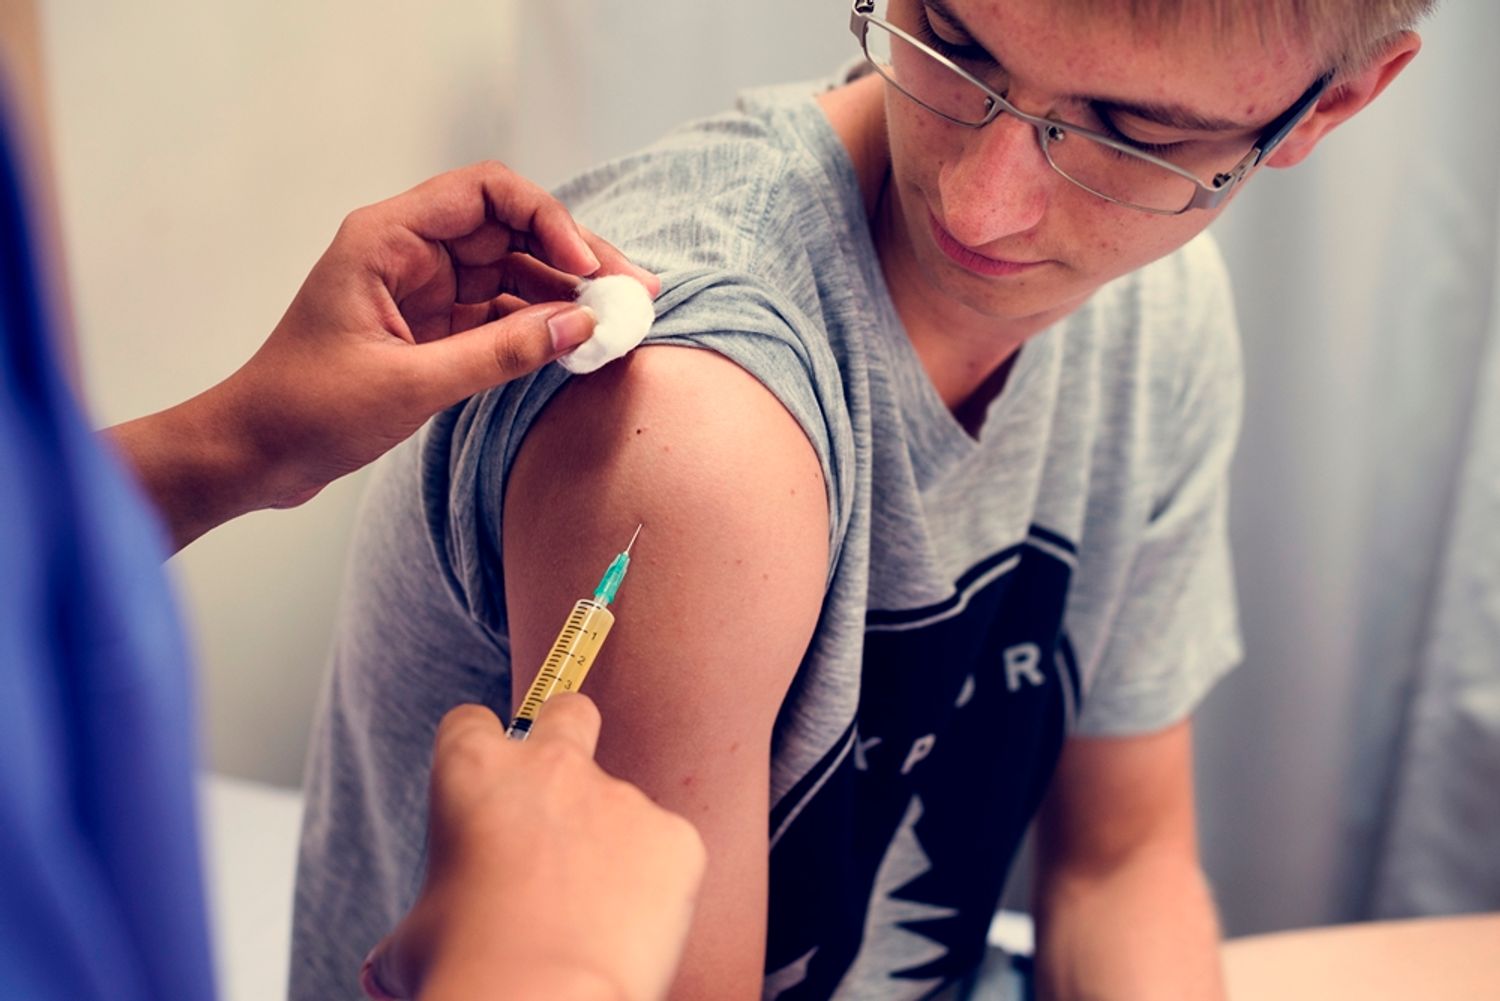 vaccination jeune garçon vaccin piqure seringue_25 11 21_rawpixel